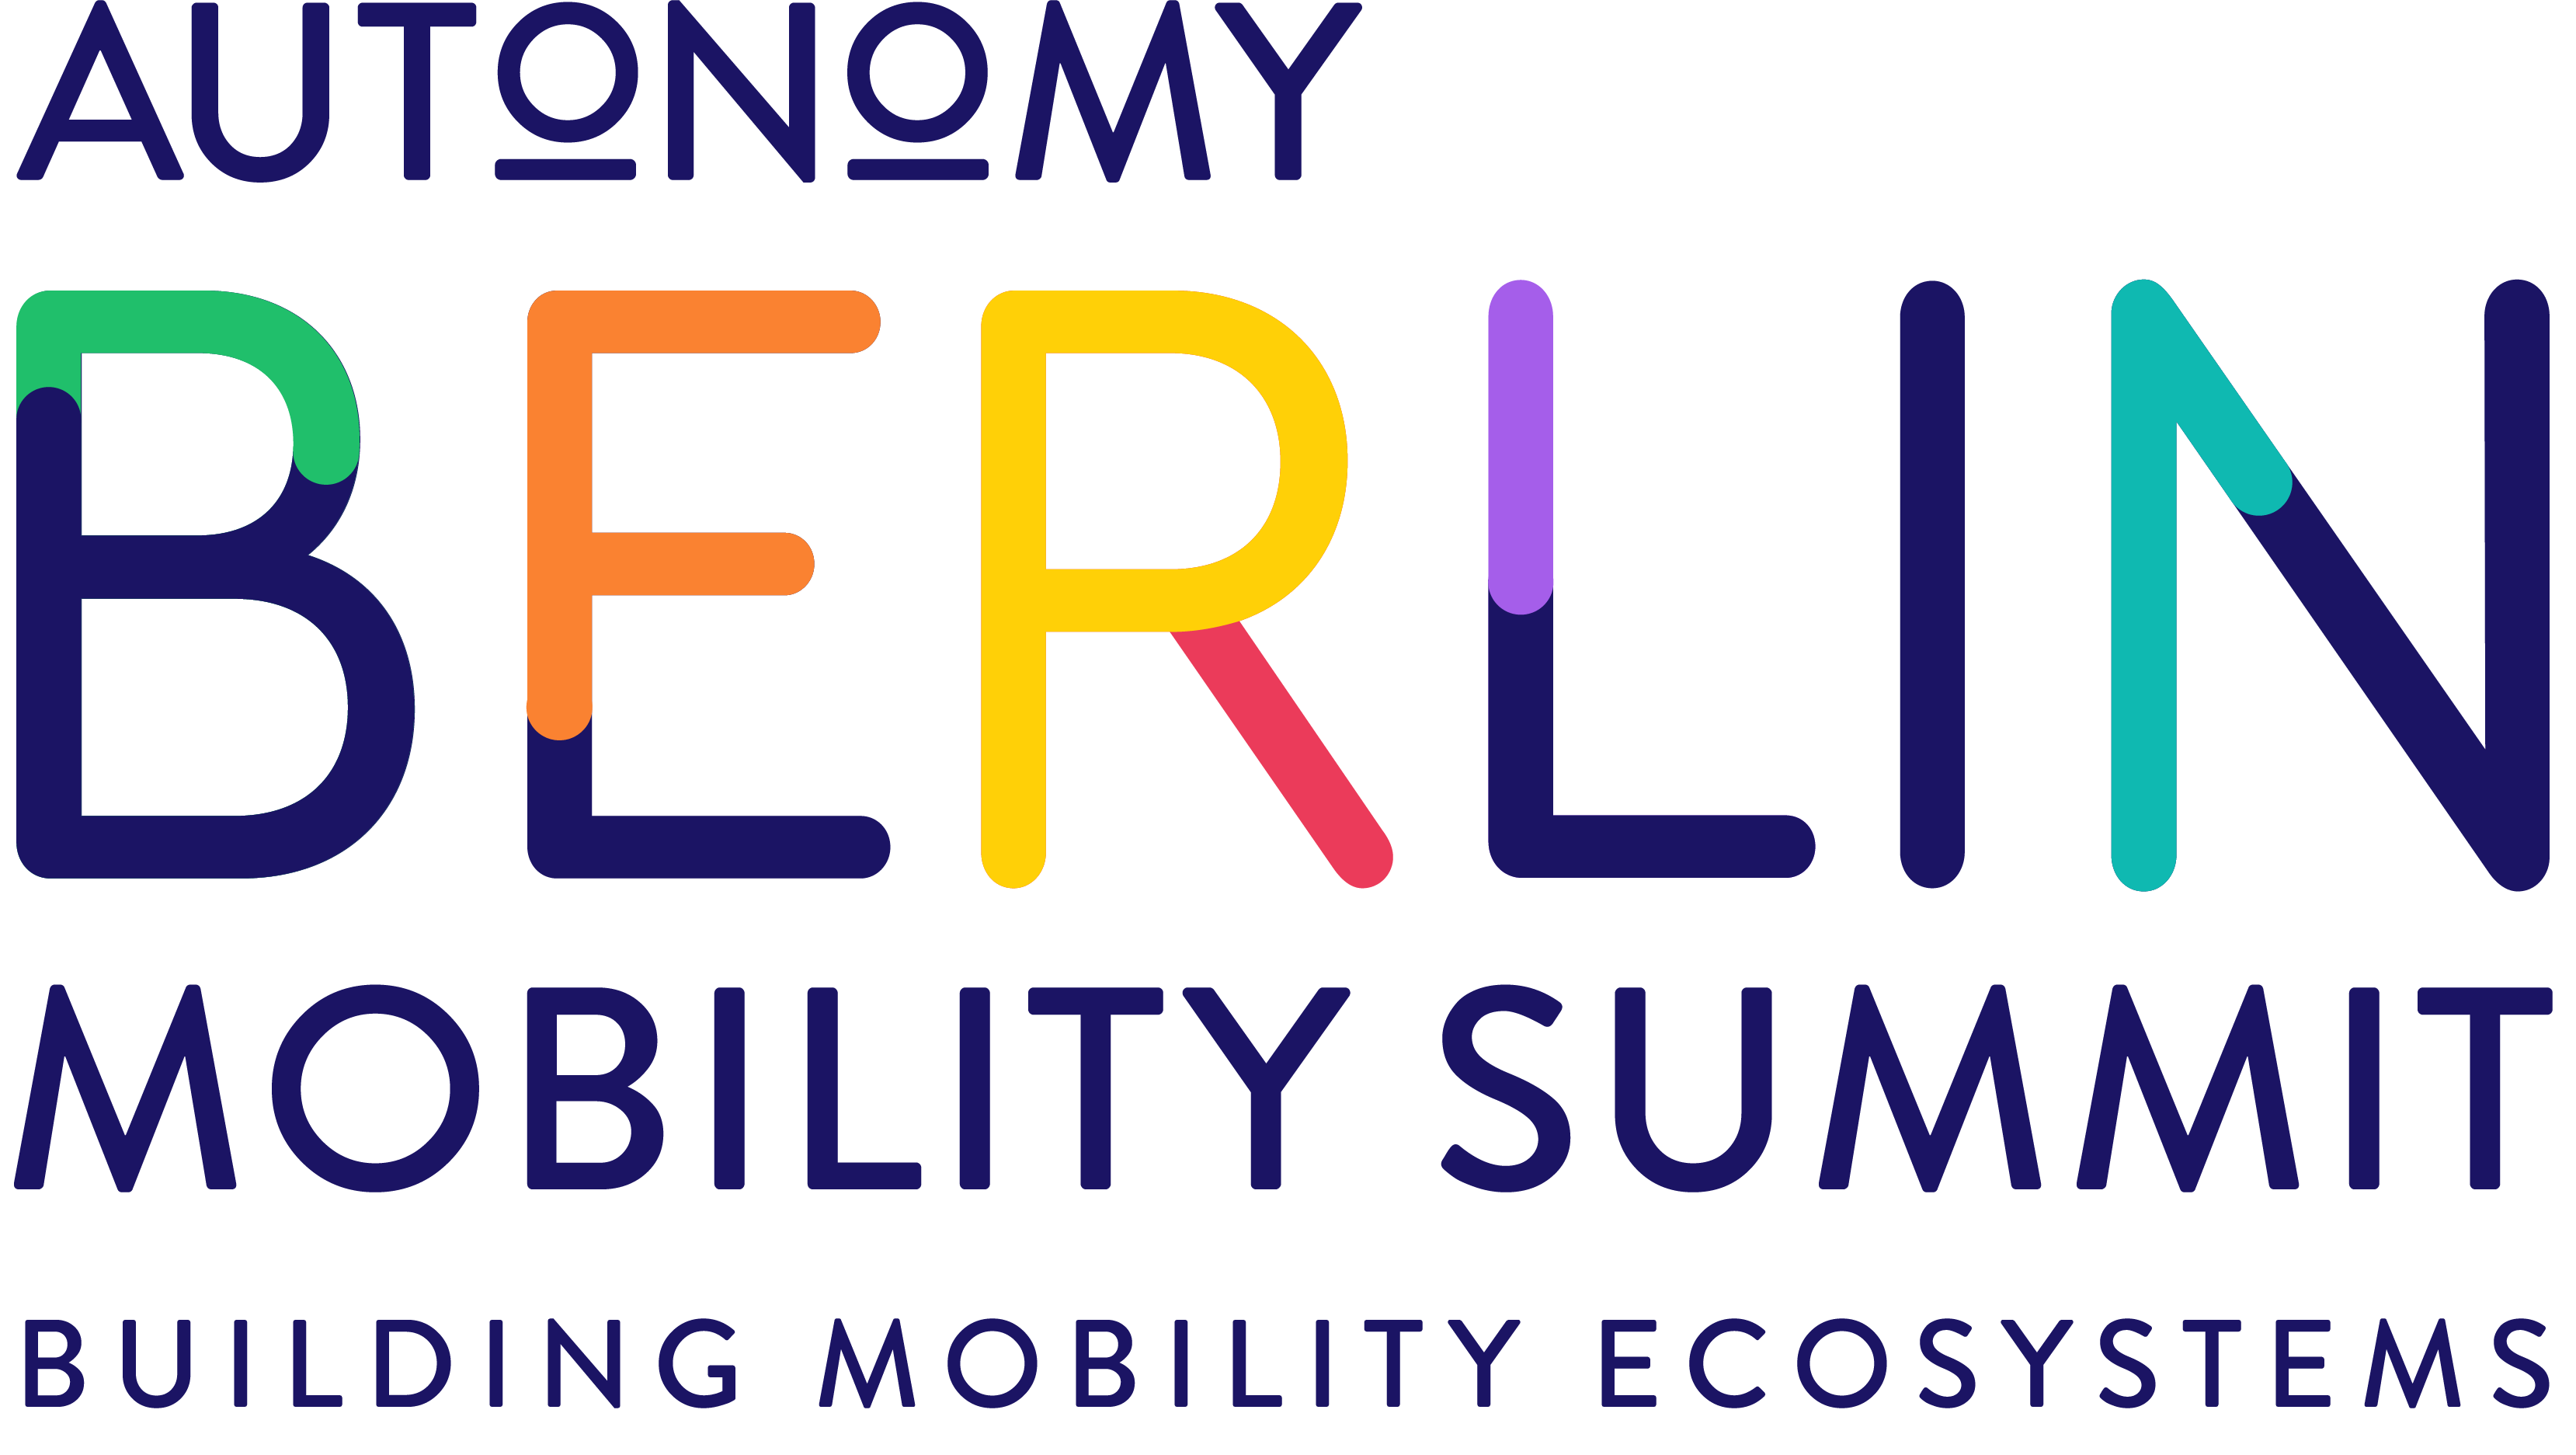 Mobility Summit Berlin